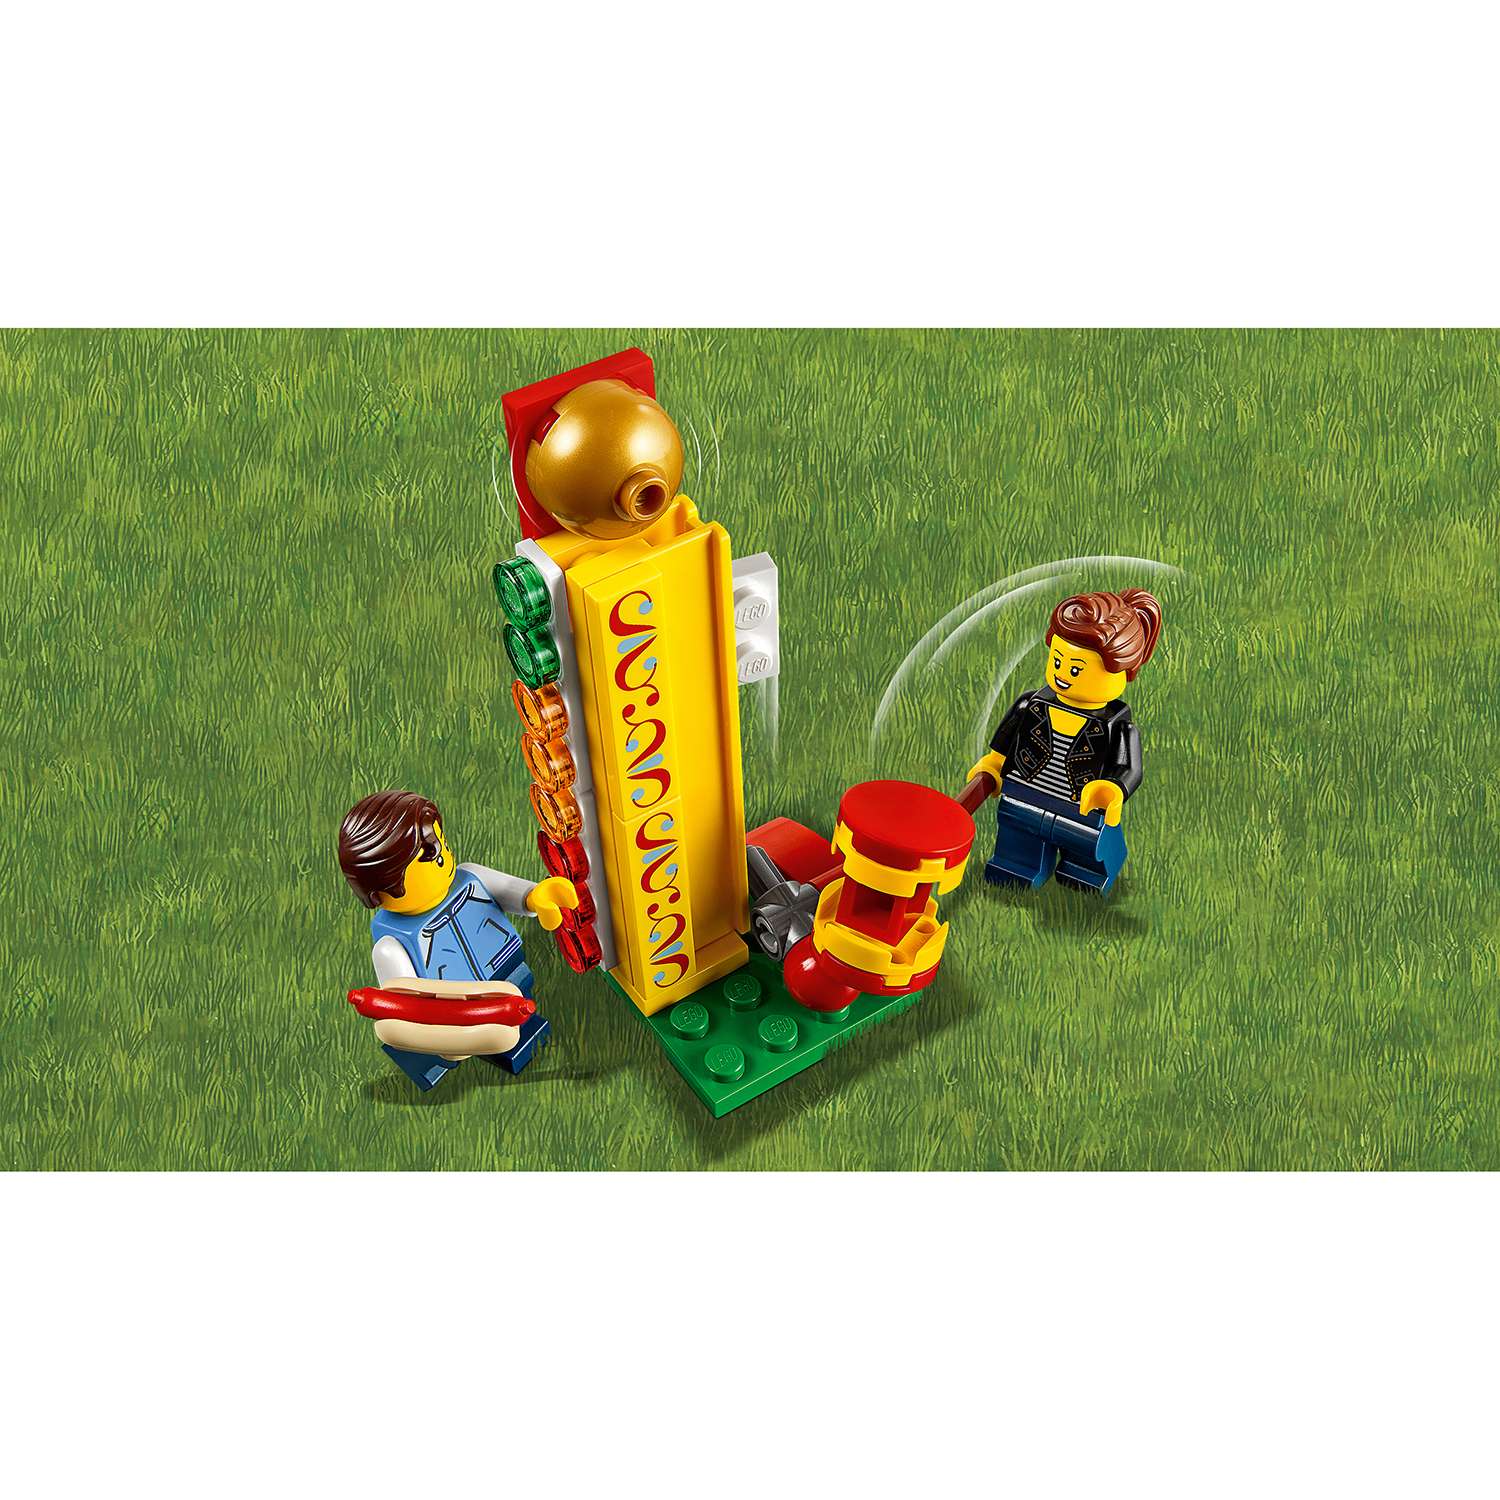 Конструктор LEGO City Town Комплект минифигурок Весёлая ярмарка 60234 - фото 11